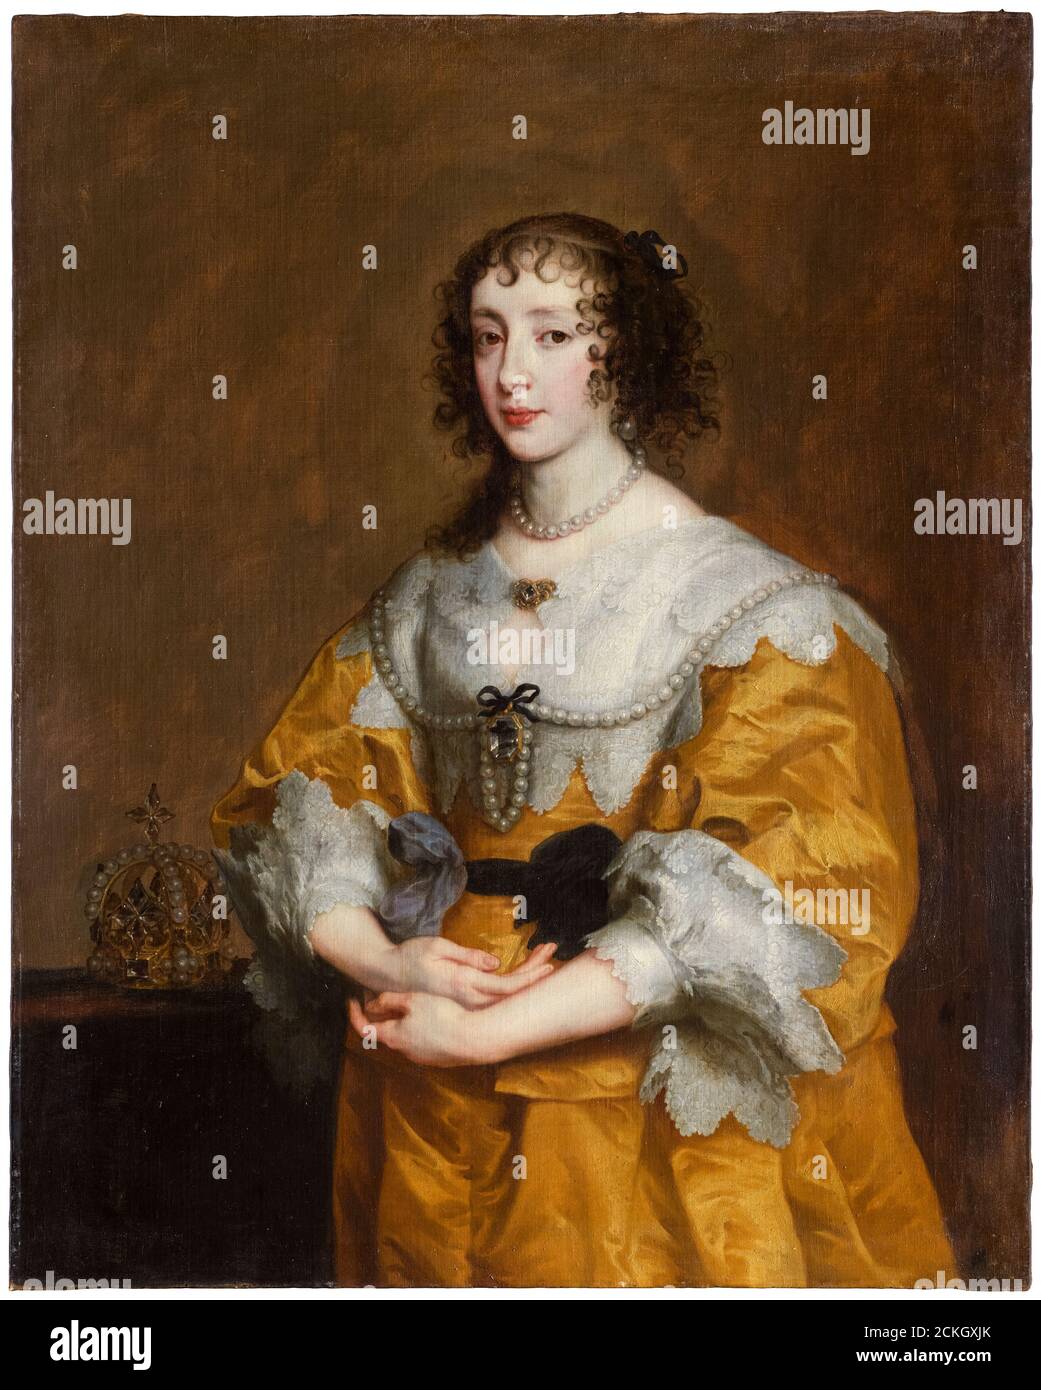 Una incinta regina Enrichetta Maria (1609-1669), regina consorte e moglie di Carlo i d'Inghilterra, Scozia e Irlanda, ritratto di Anthony van Dyck, 1636 Foto Stock